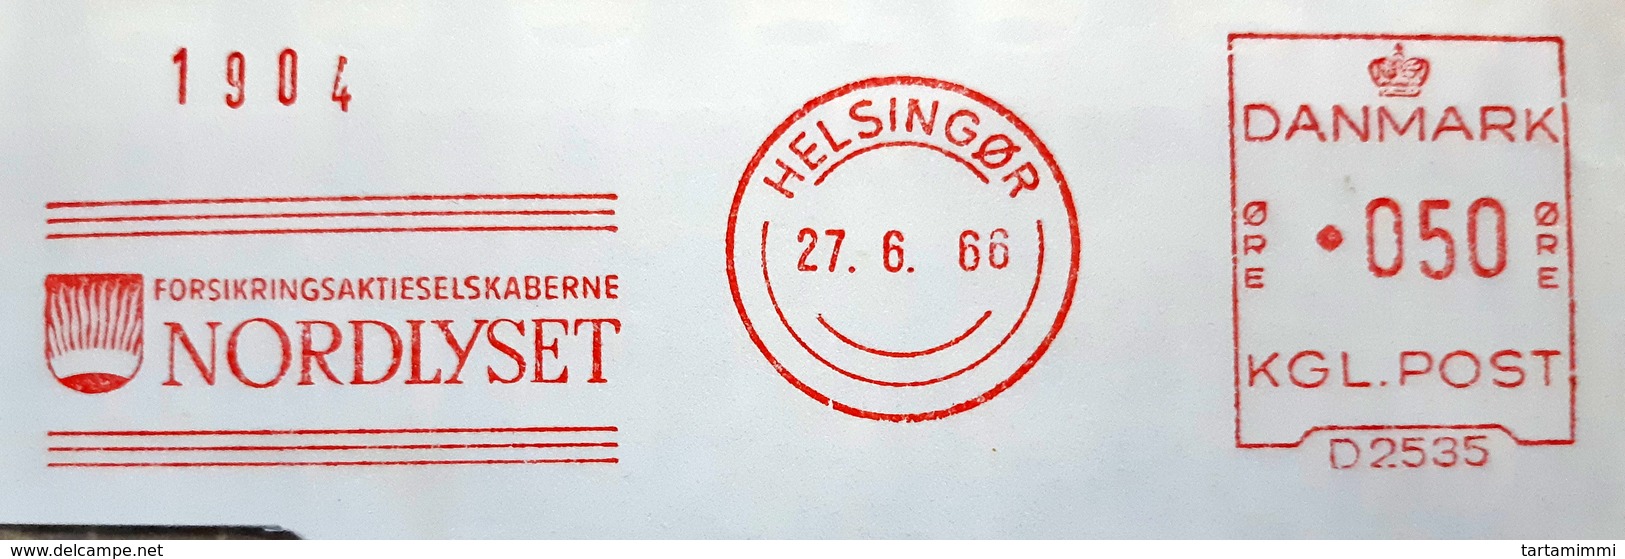 EMA AFS METER STAMP FREISTEMPEL - DANMARK HELSINGØR 1966 NORDLYSET SUNSHINE SUNSET SUN SOLEIL - Macchine Per Obliterare (EMA)